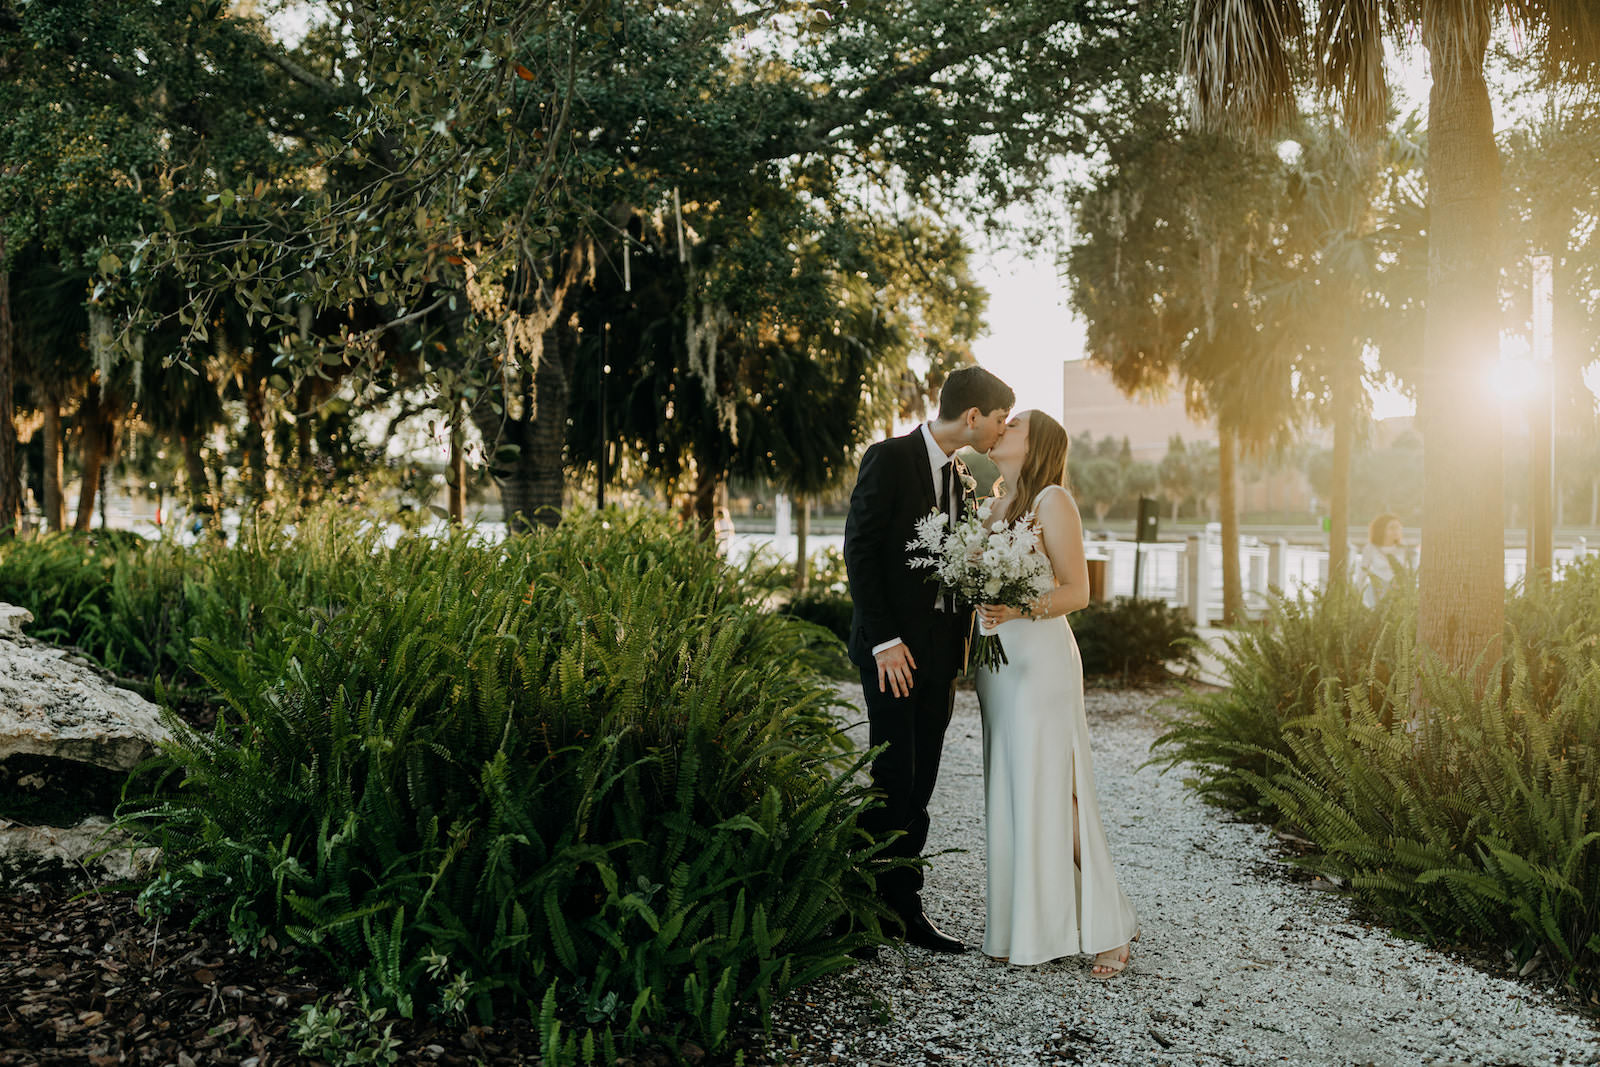 Modern Neutral Bride and Groom Sunset Wedding Photo | Tampa Bay Wedding Photographer Amber McWhorter